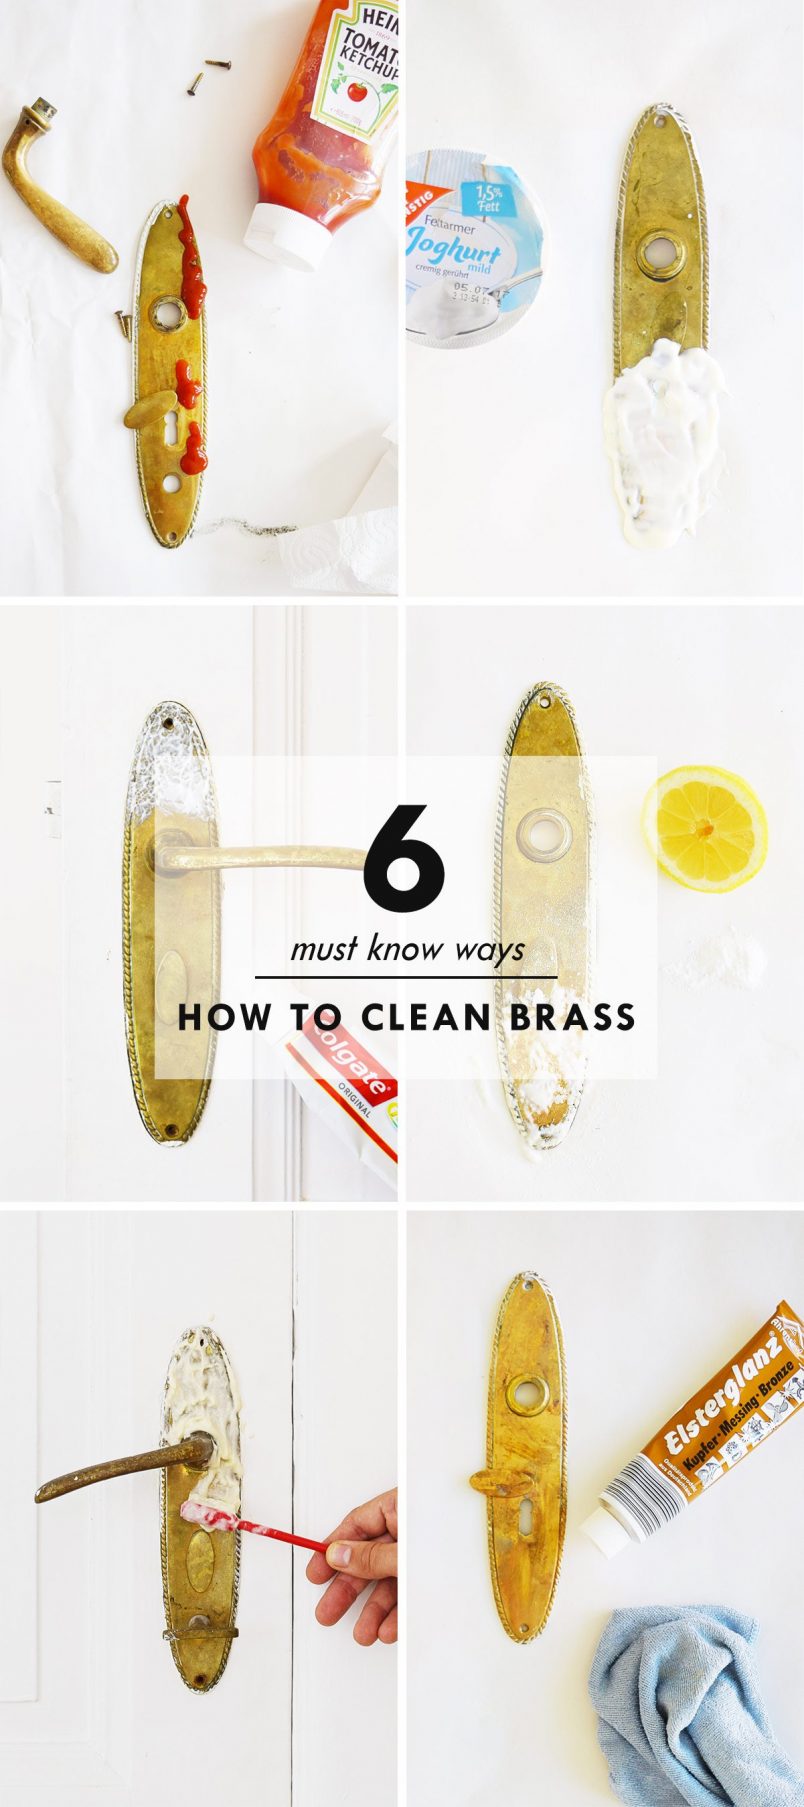 How to Polish Brass